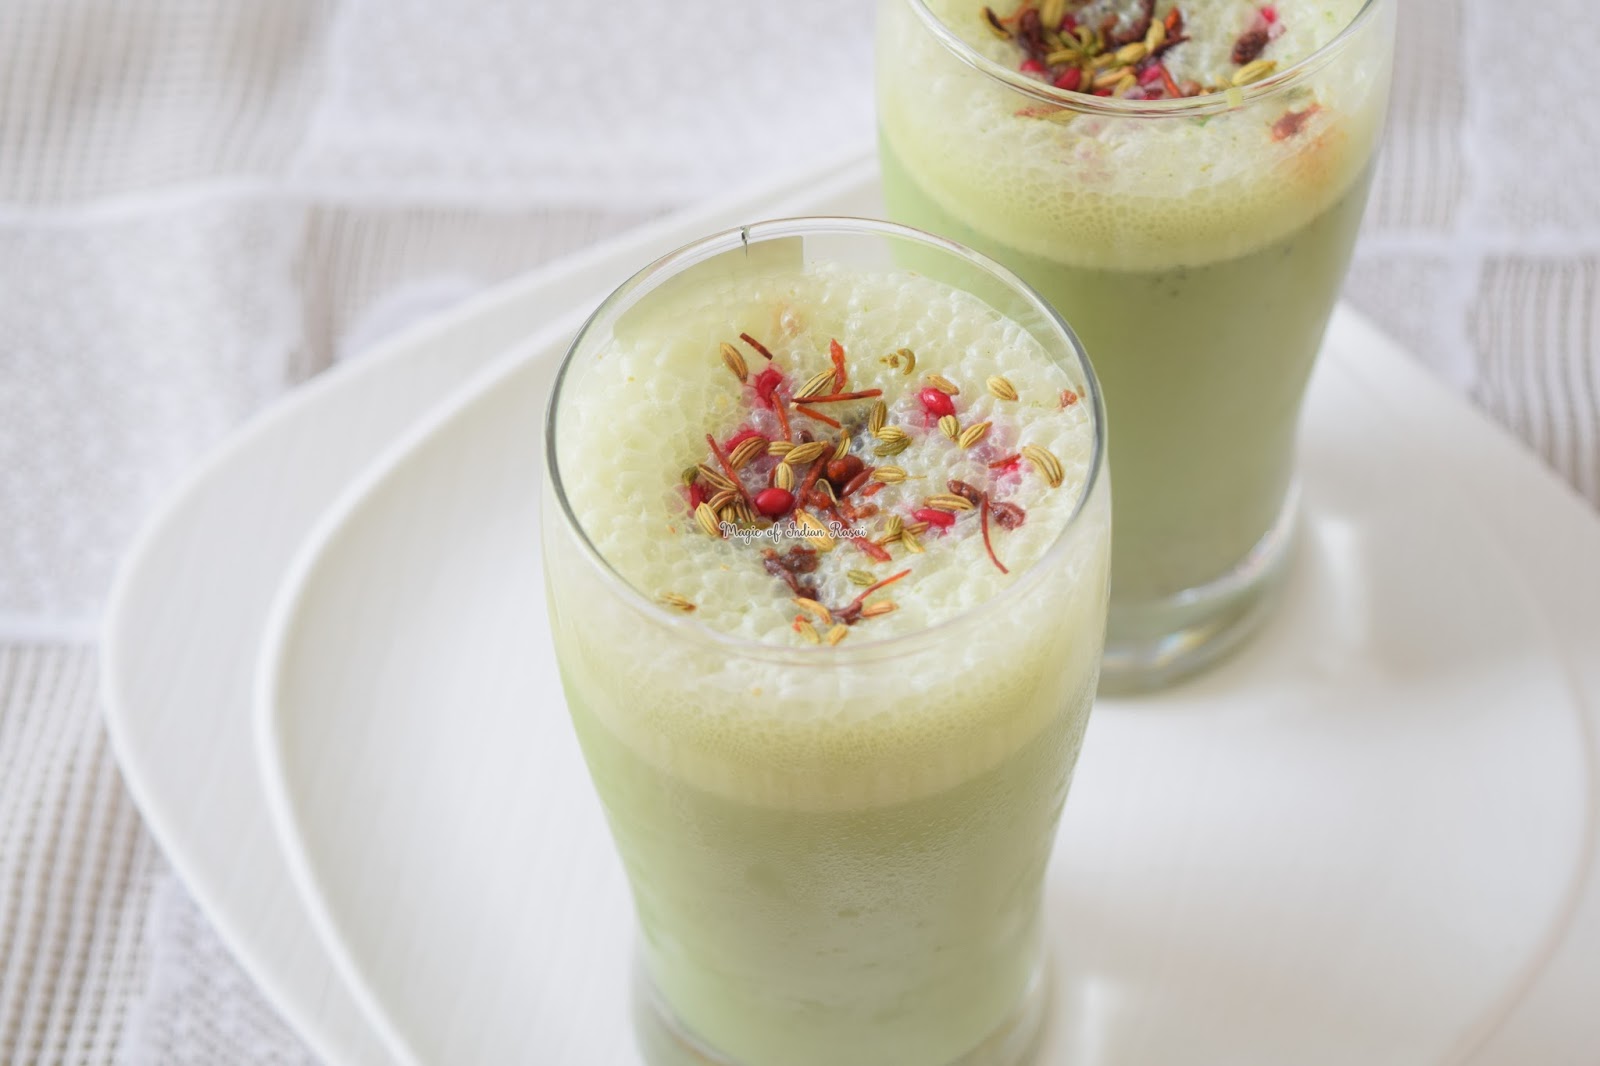 Paan Shots - Refreshing Paan (Betel Leaves) Milk Drink Recipe - पान शॉट्स - रिफ्रेशिंग पान मिल्कशेक रेसिपी - Priya R - Magic of Indian Rasoi